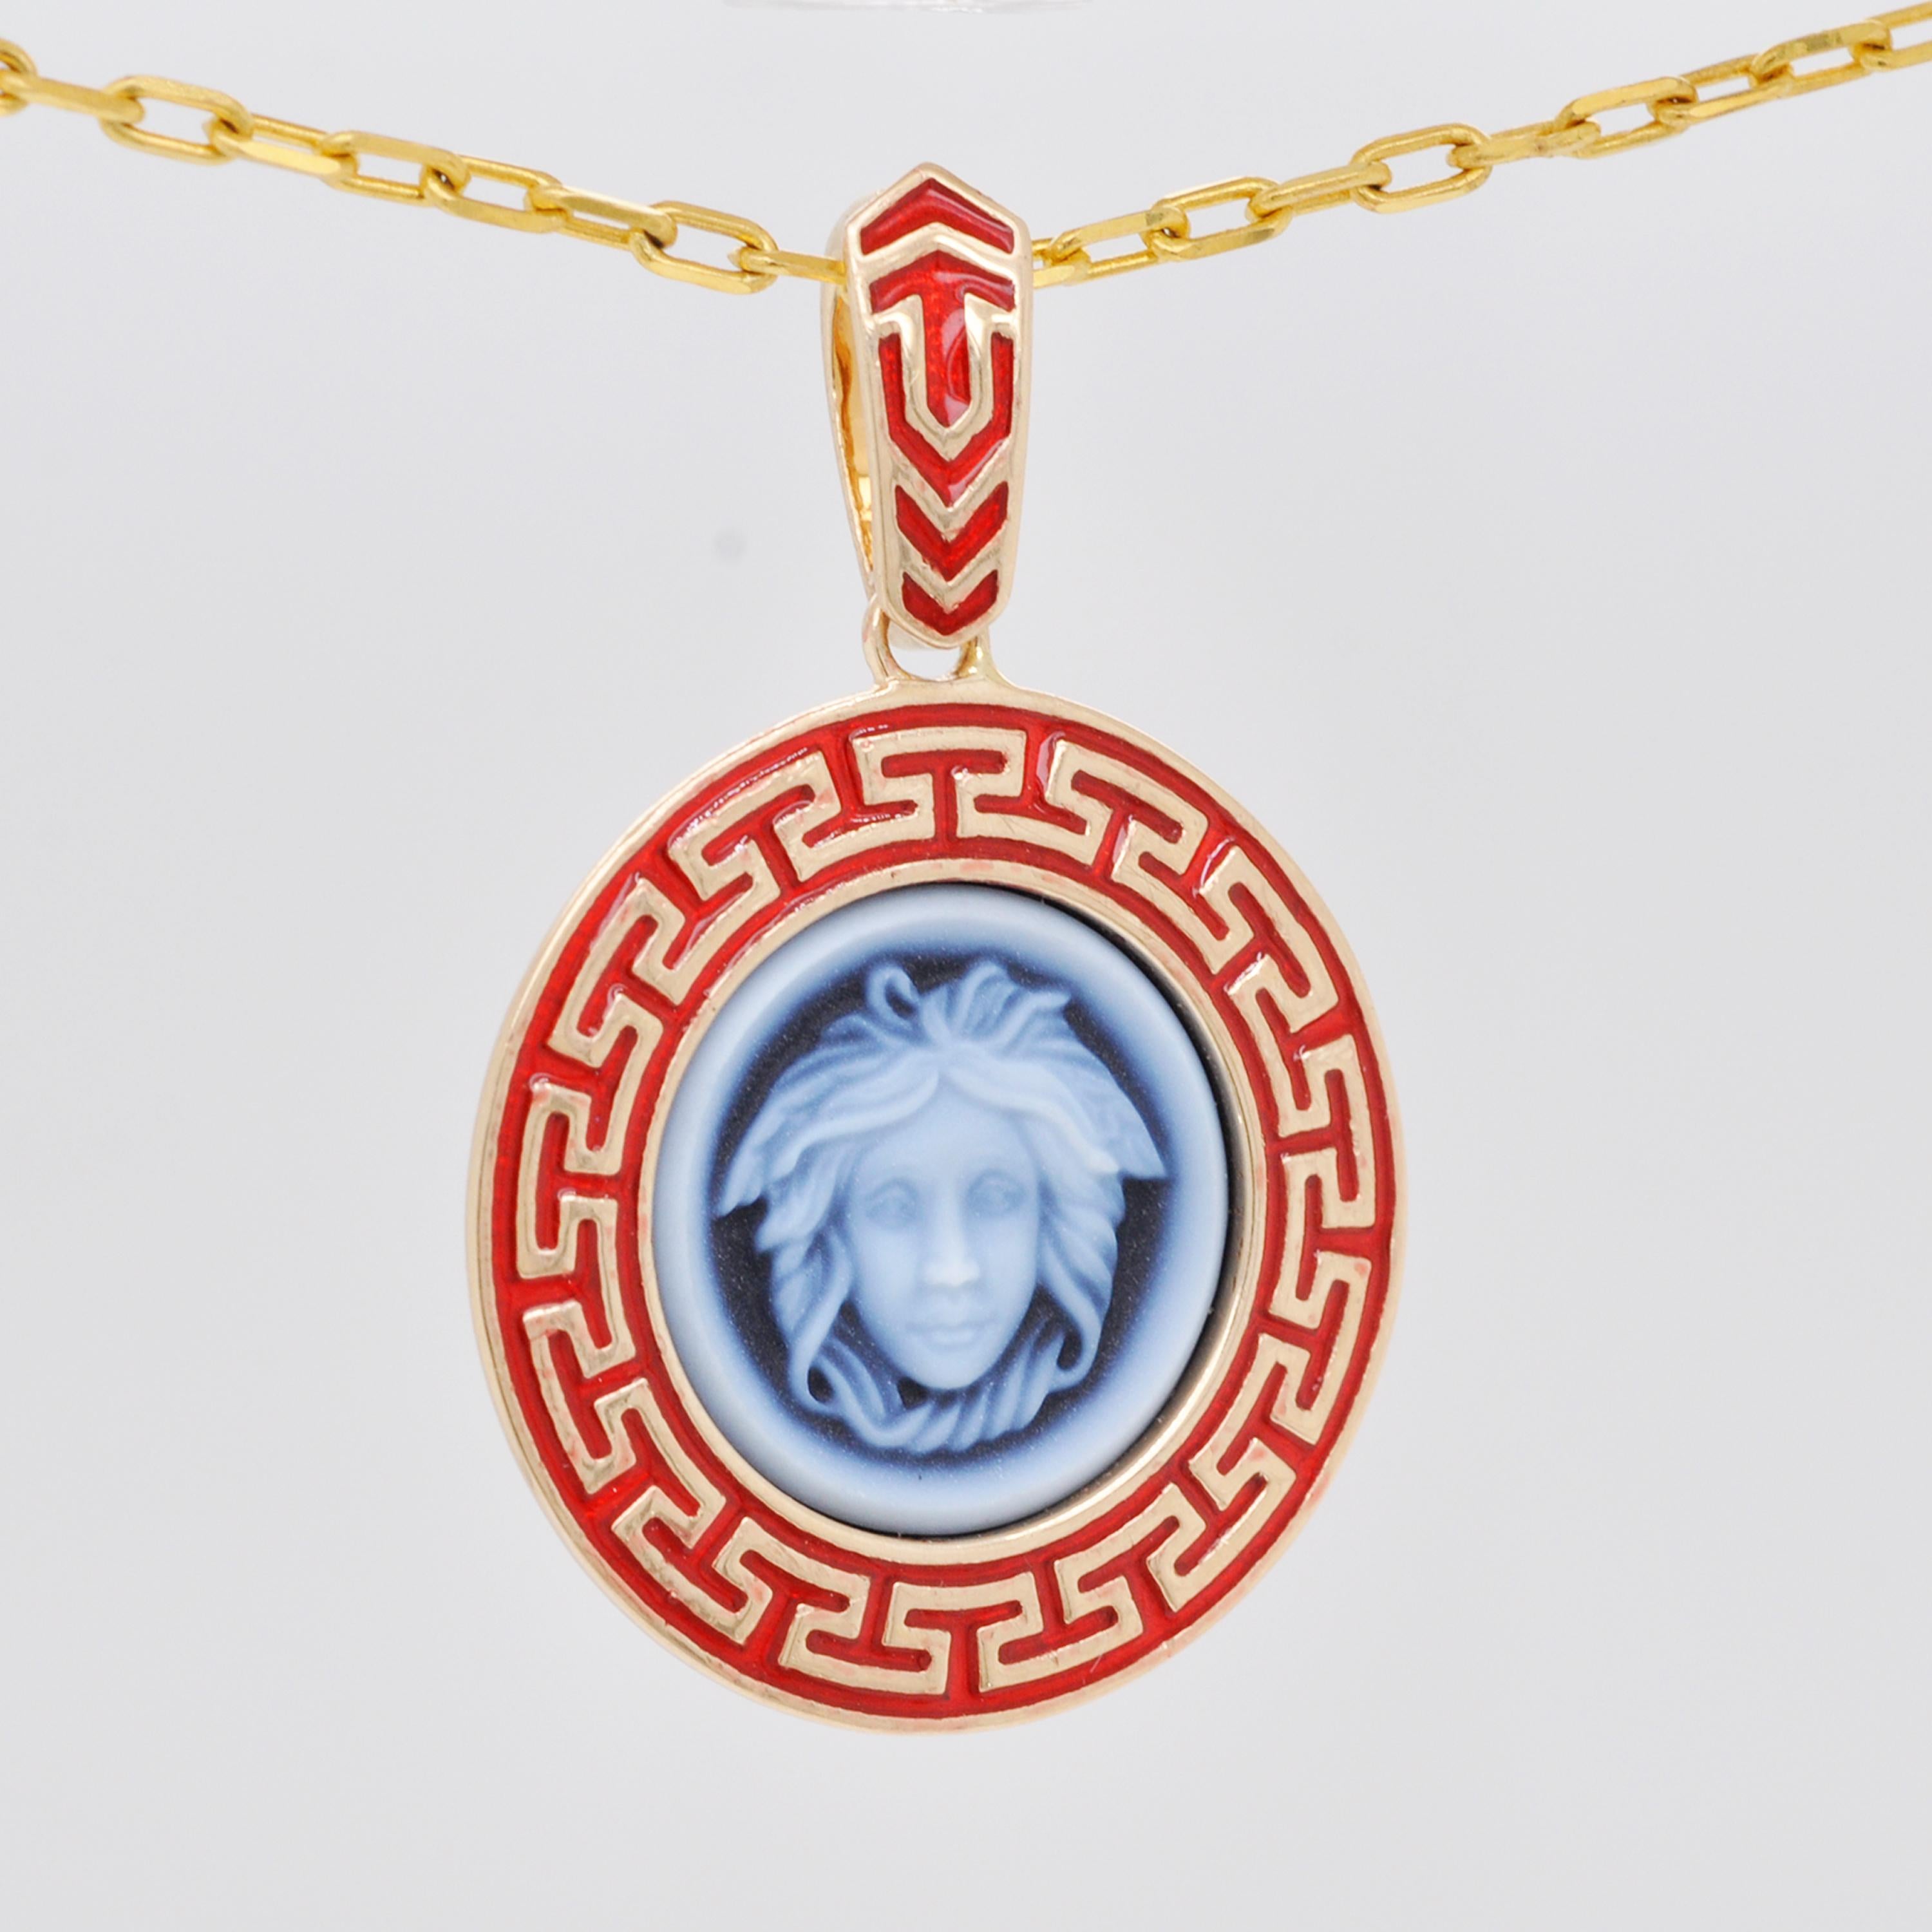 Contemporary 14 Karat Gold Versace Design Medusa Cameo Greek Design Enamel Pendant Necklace For Sale